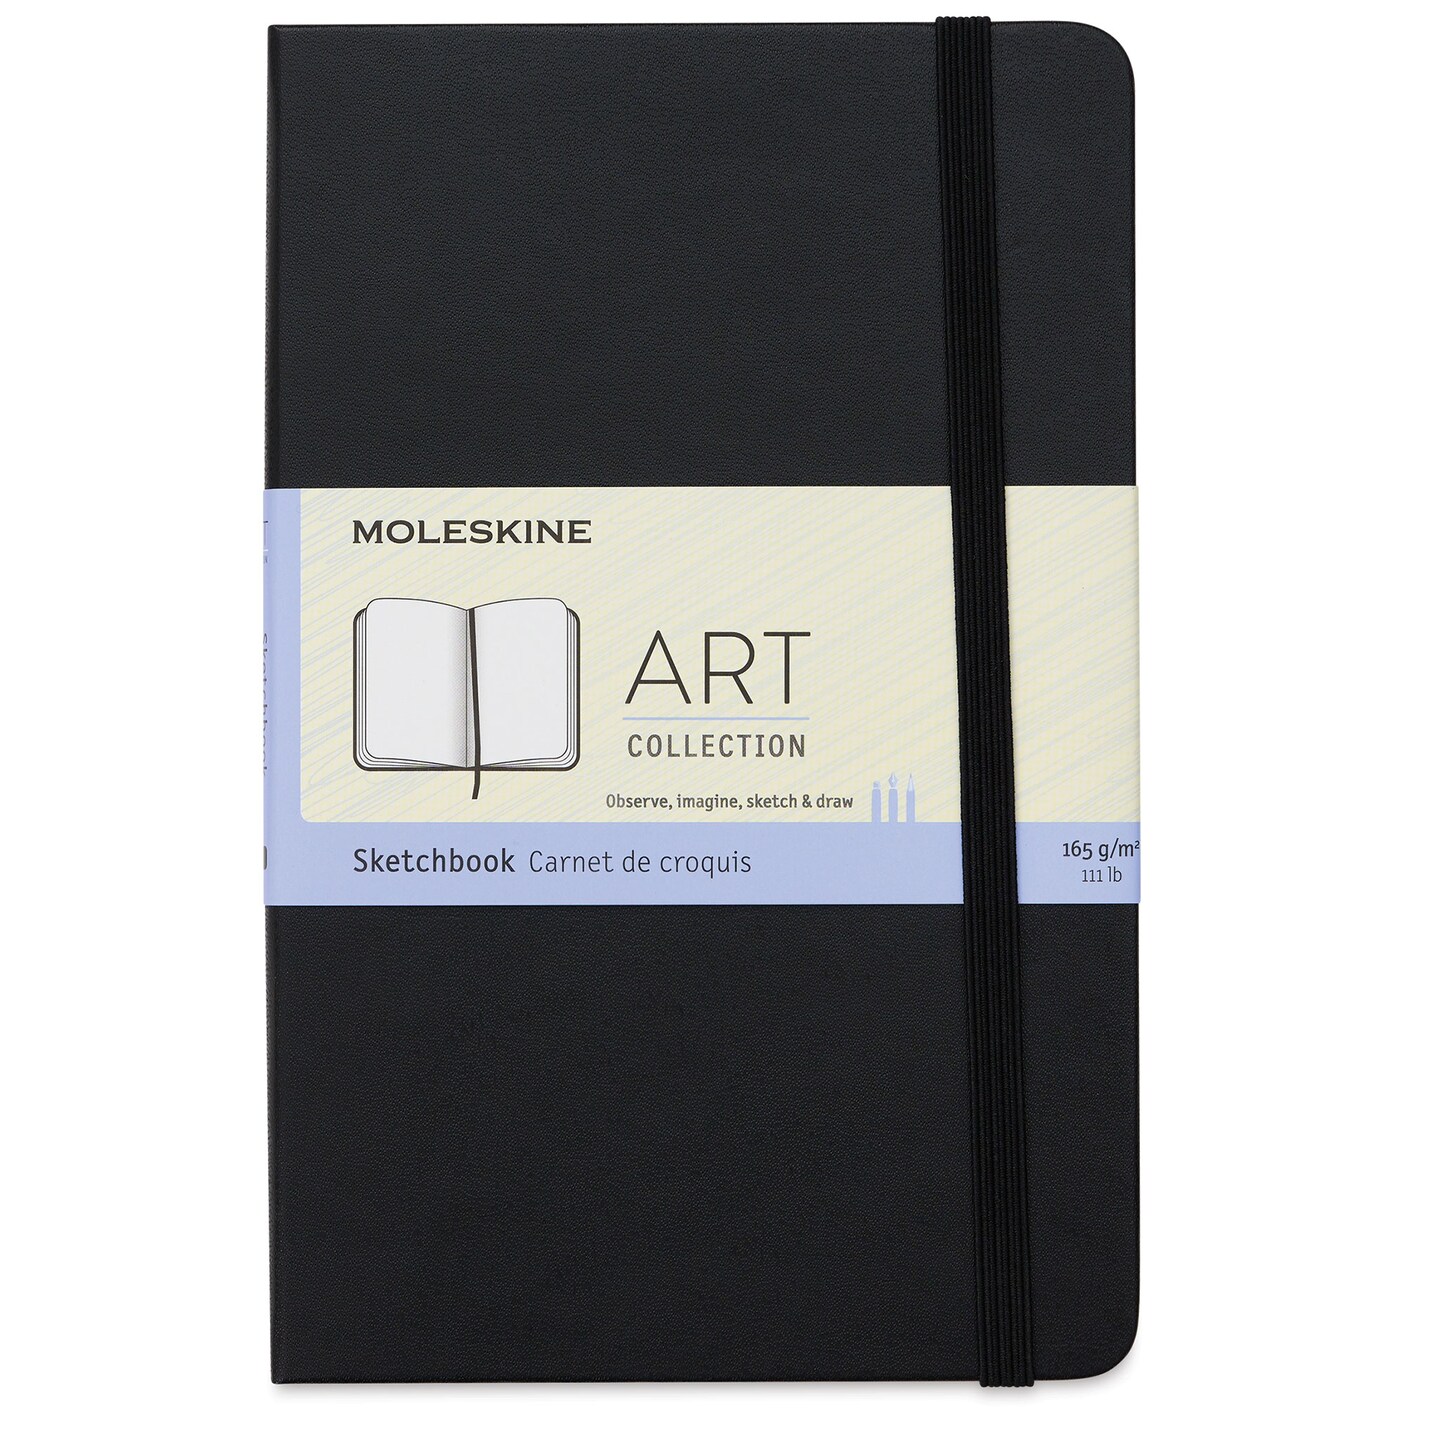 The Best Sketchbooks For Every Medium